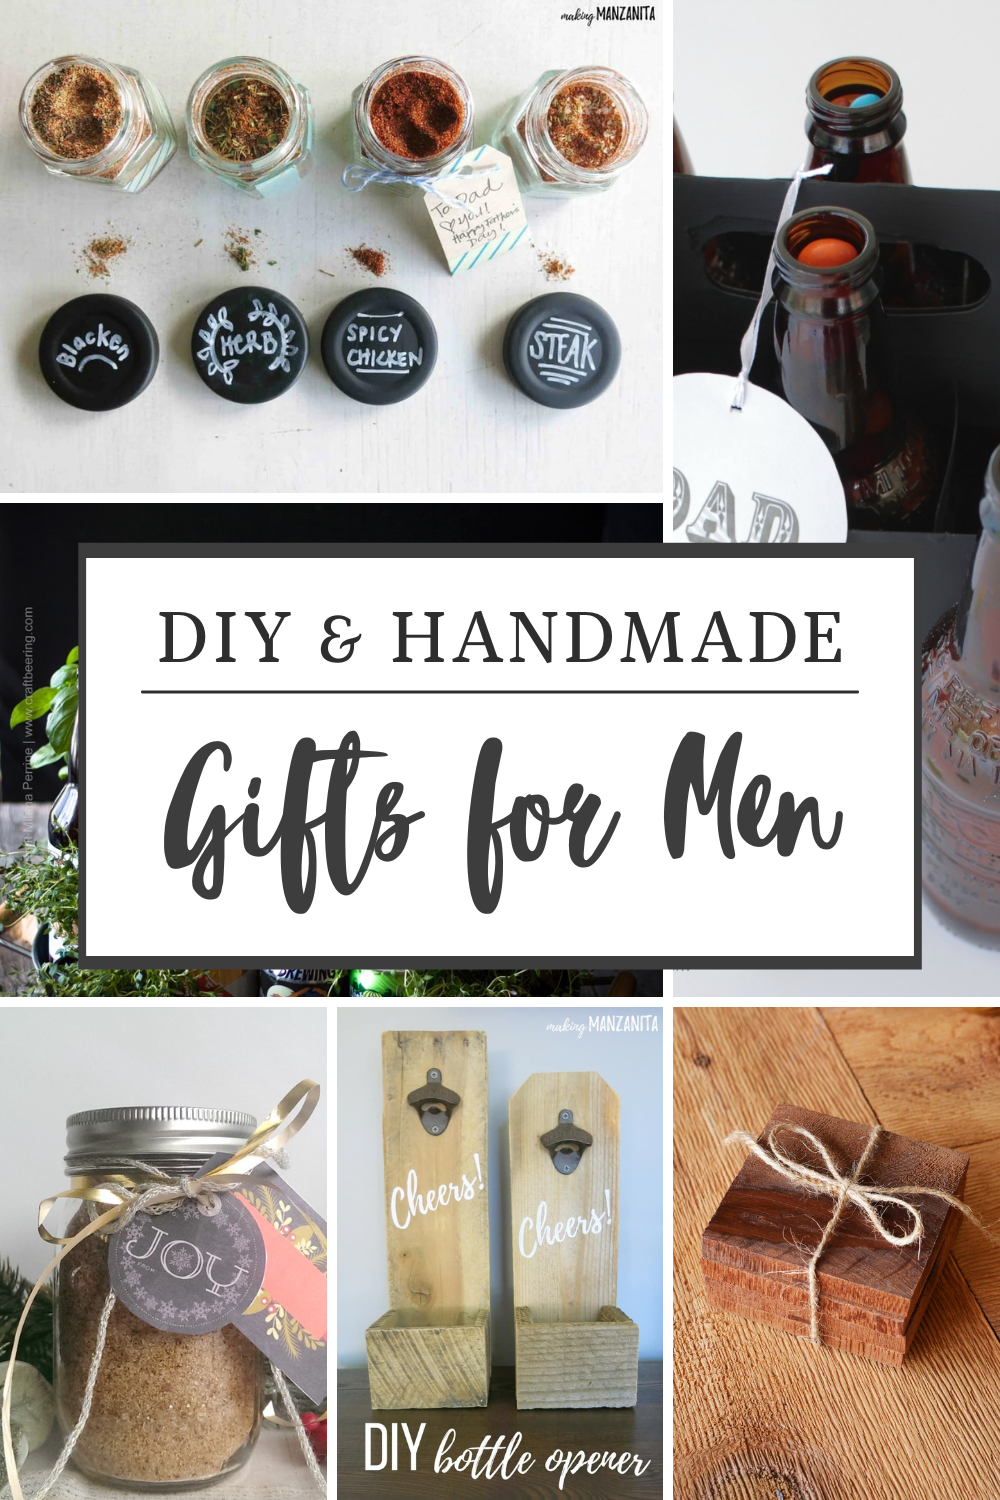 https://busybeingjennifer.com/wp-content/uploads/2022/10/DIY-Handmade-Gifts-for-Men.png